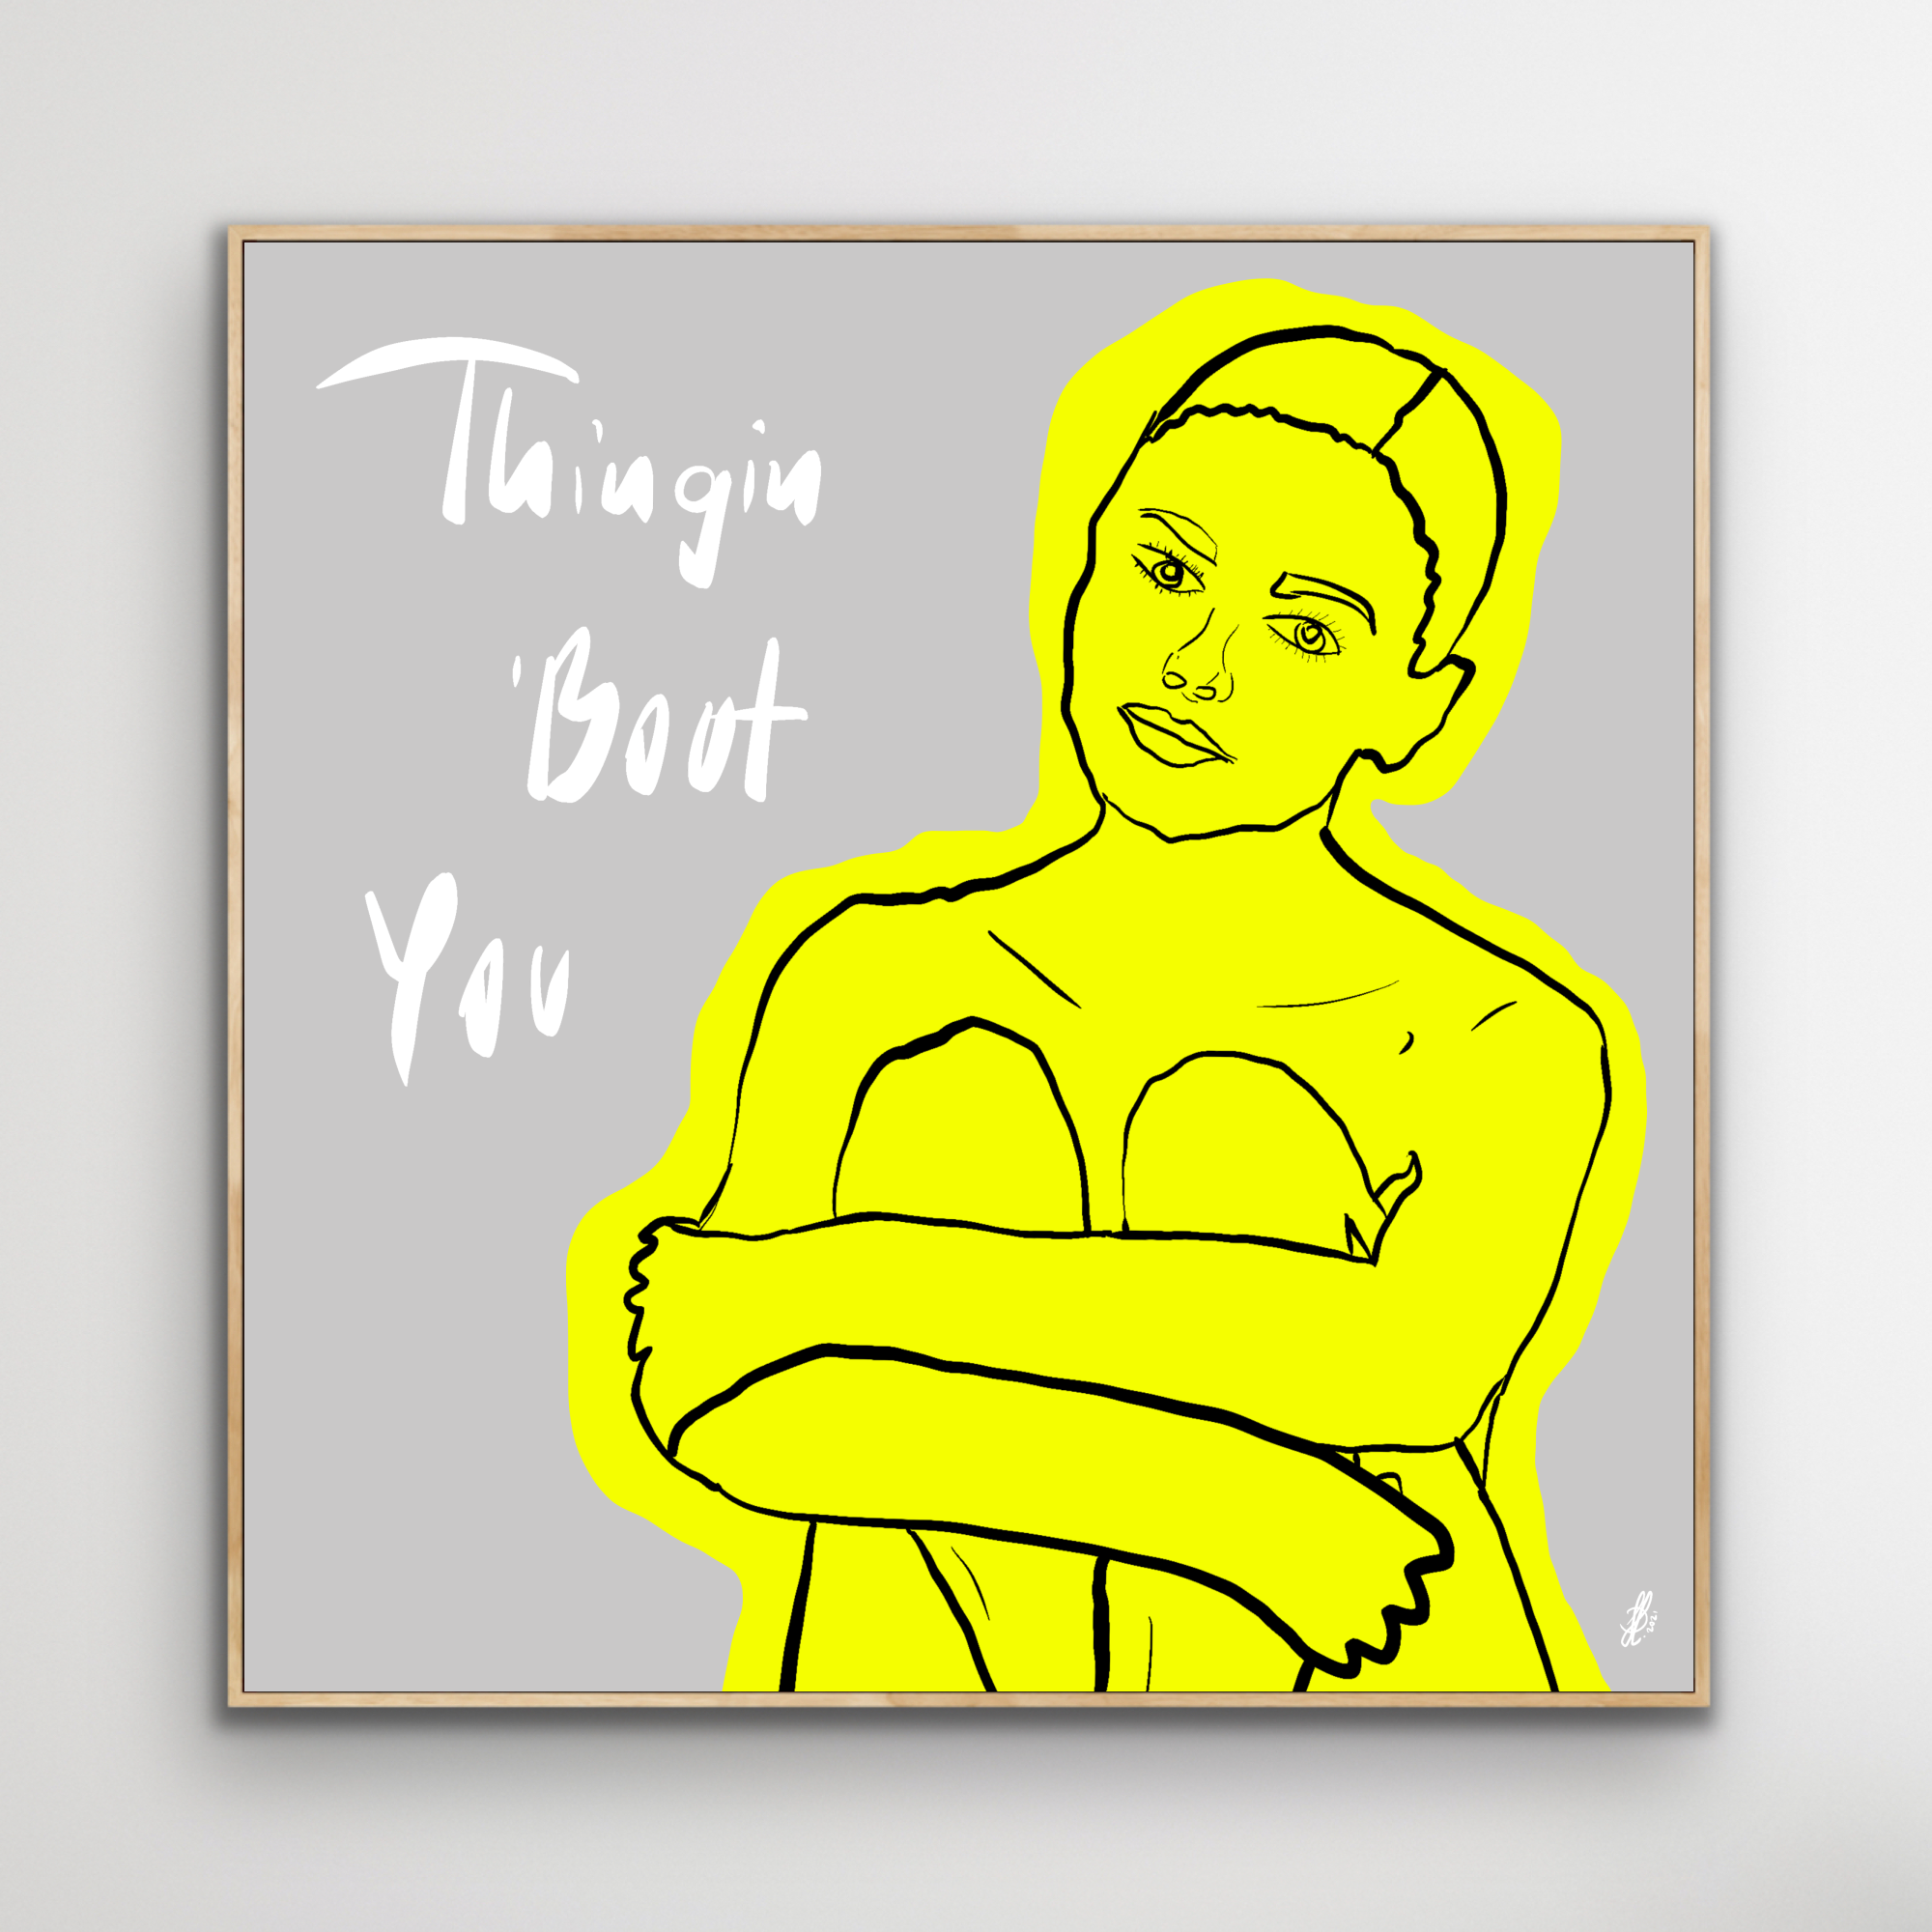 Plakat: "Thinkin Bout You"